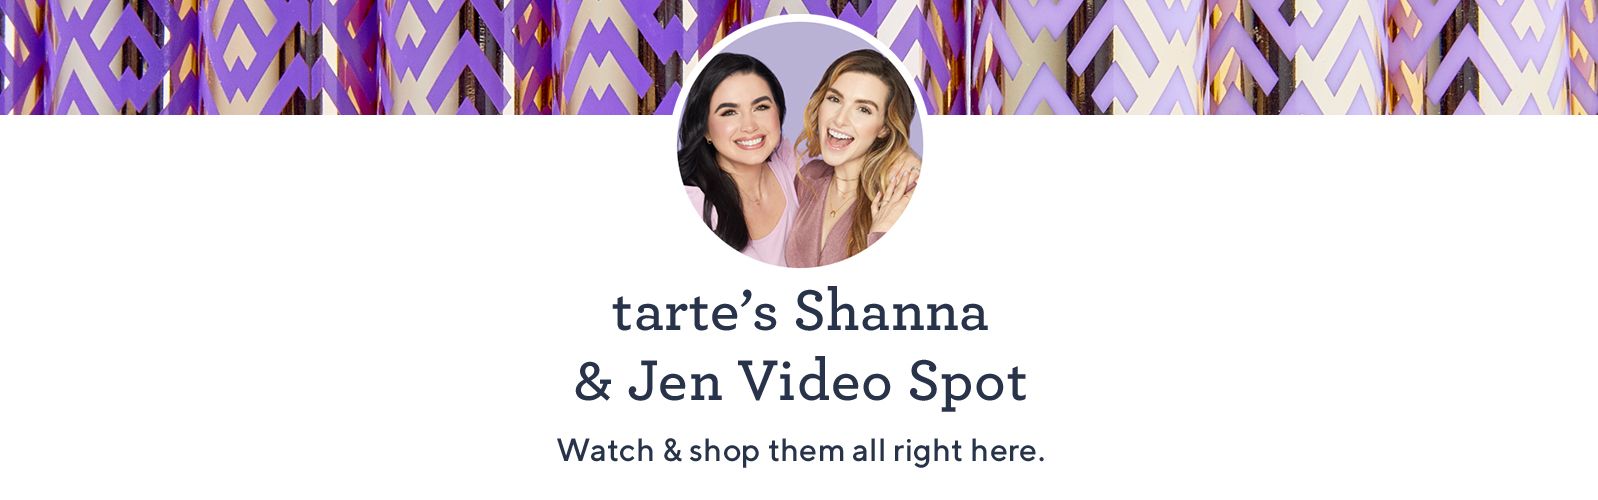 tarte's Shanna & Jen Video Spot. Watch & shop them all right here.